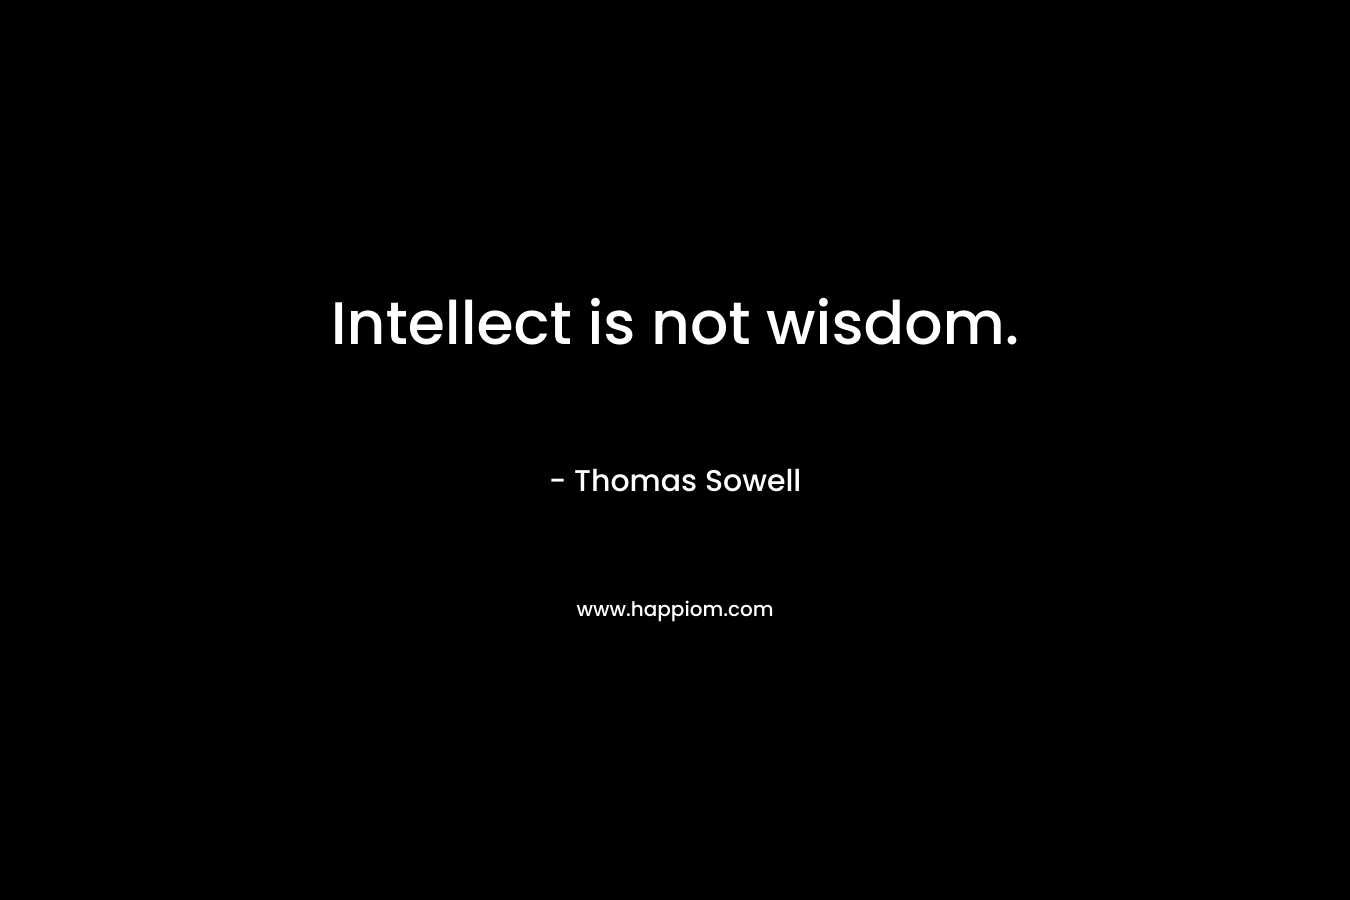 Intellect is not wisdom.